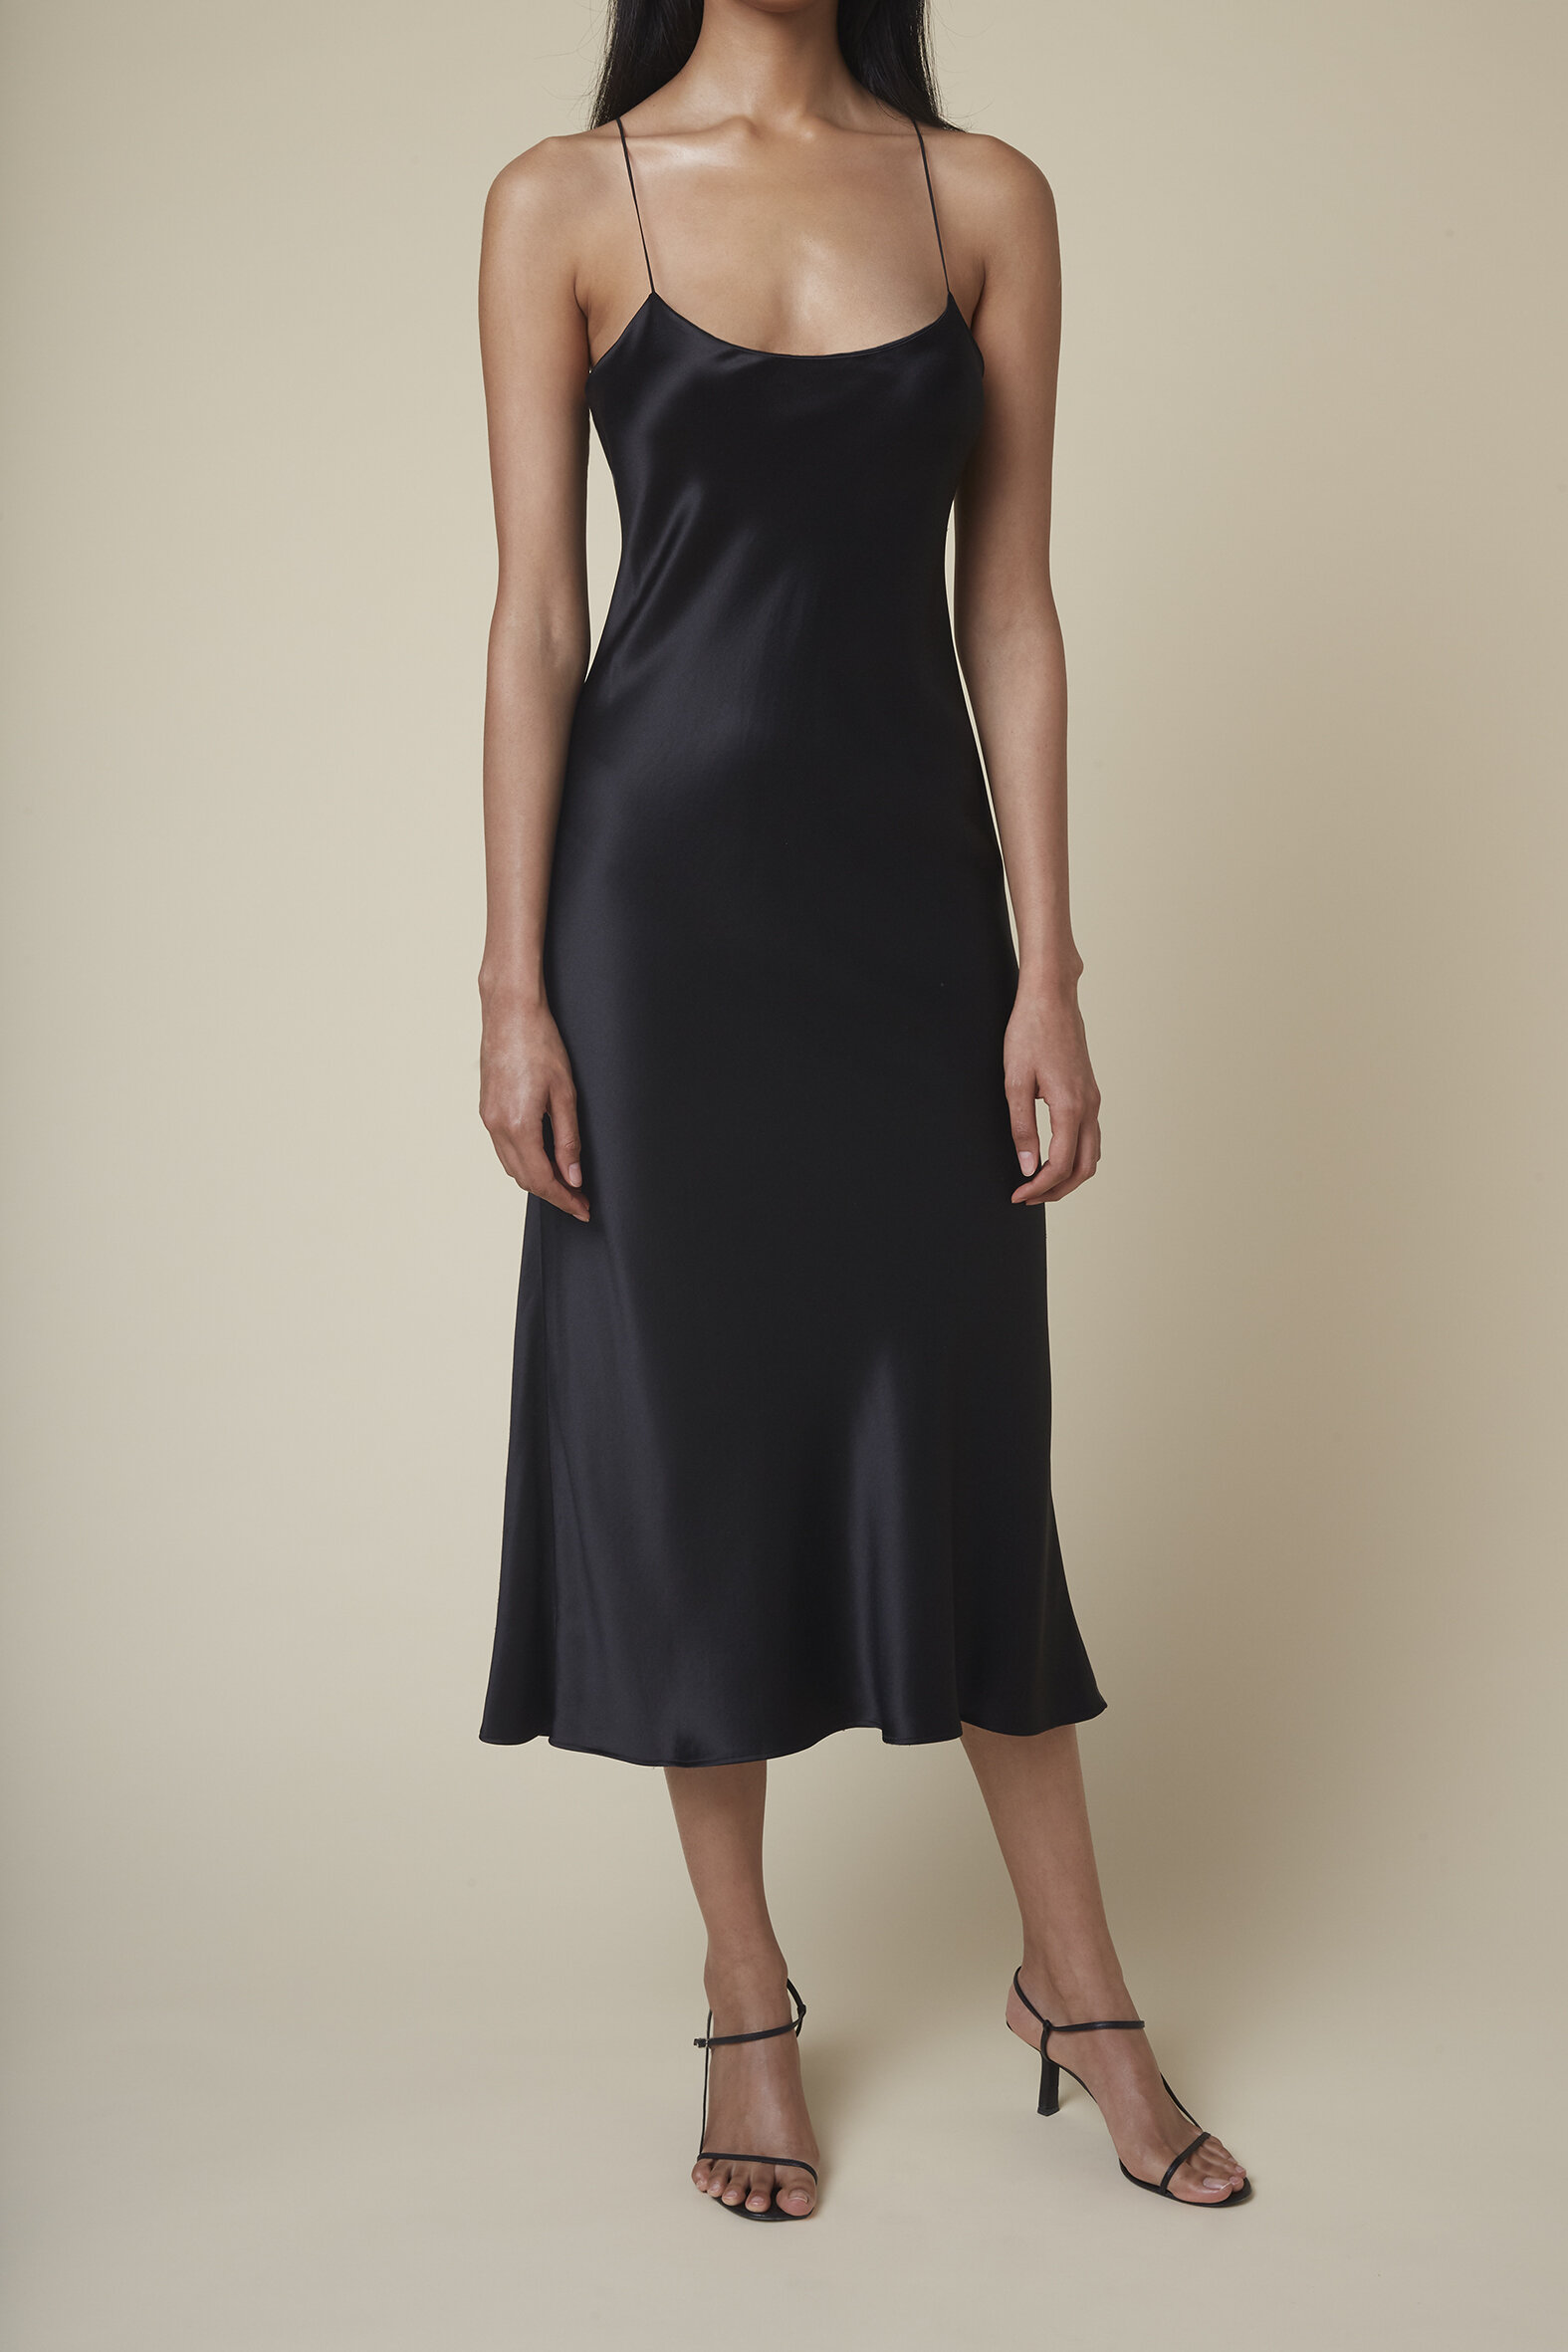 The Carolyn | Silk Slip Dress in Black 